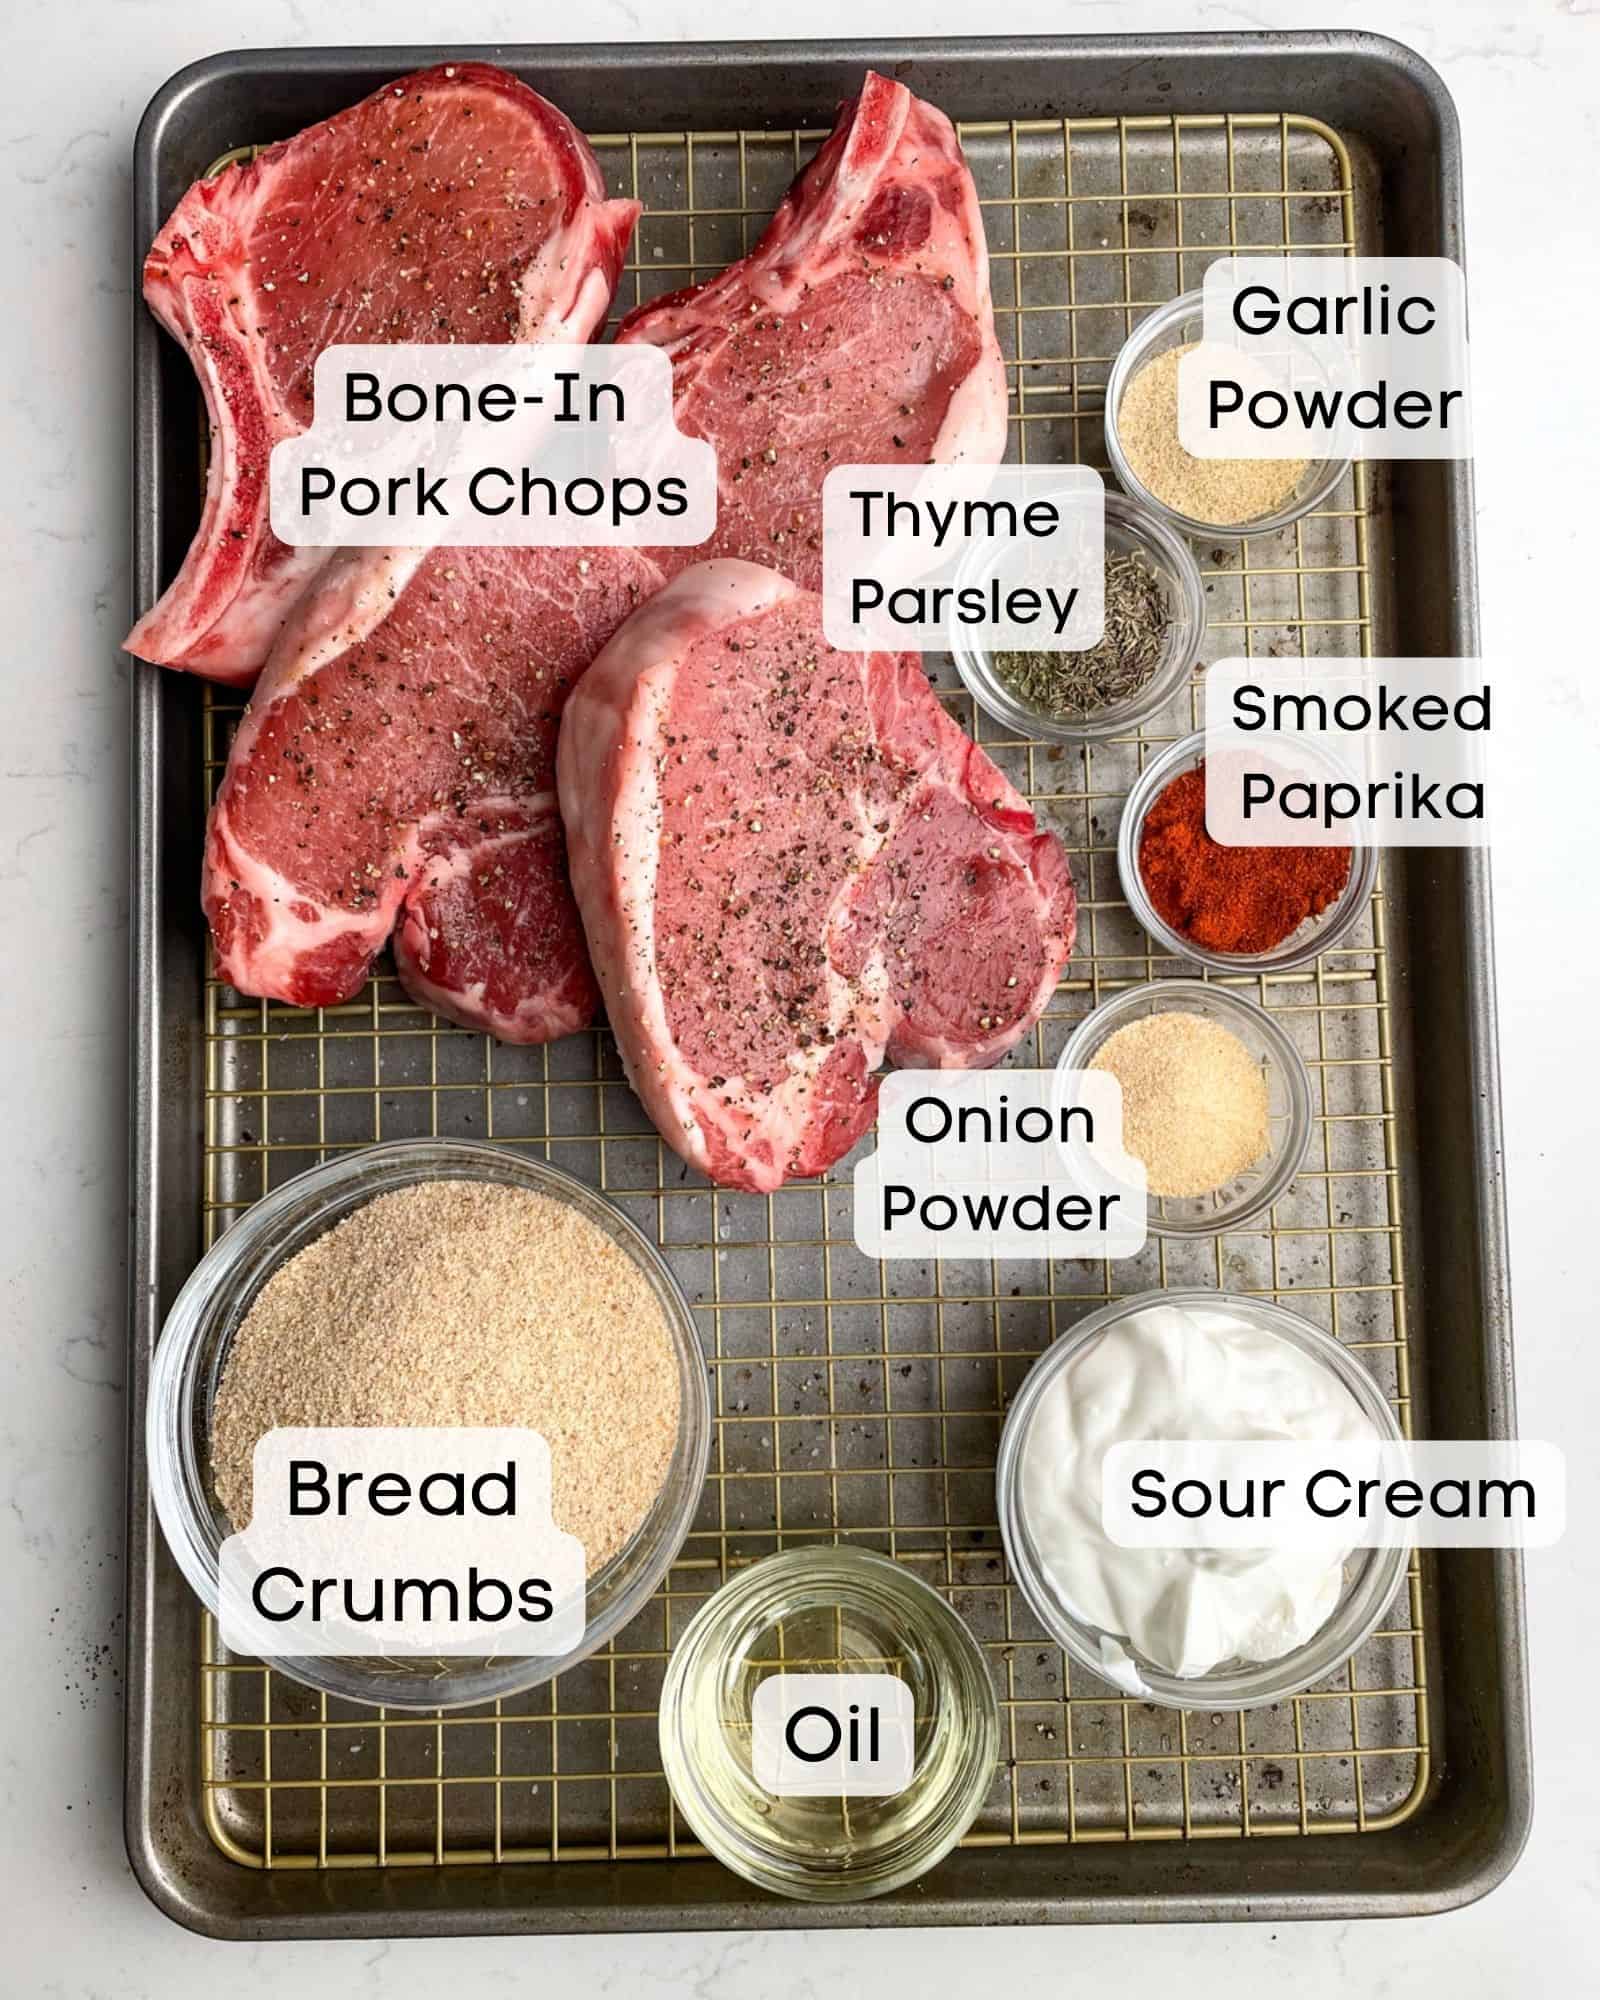 ingredients to make shake and bake pork chops - bone in pork chops, garlic powder, smoked paprika, onion powder, thyme, parsley, breadcrumbs, sour cream, and oil.